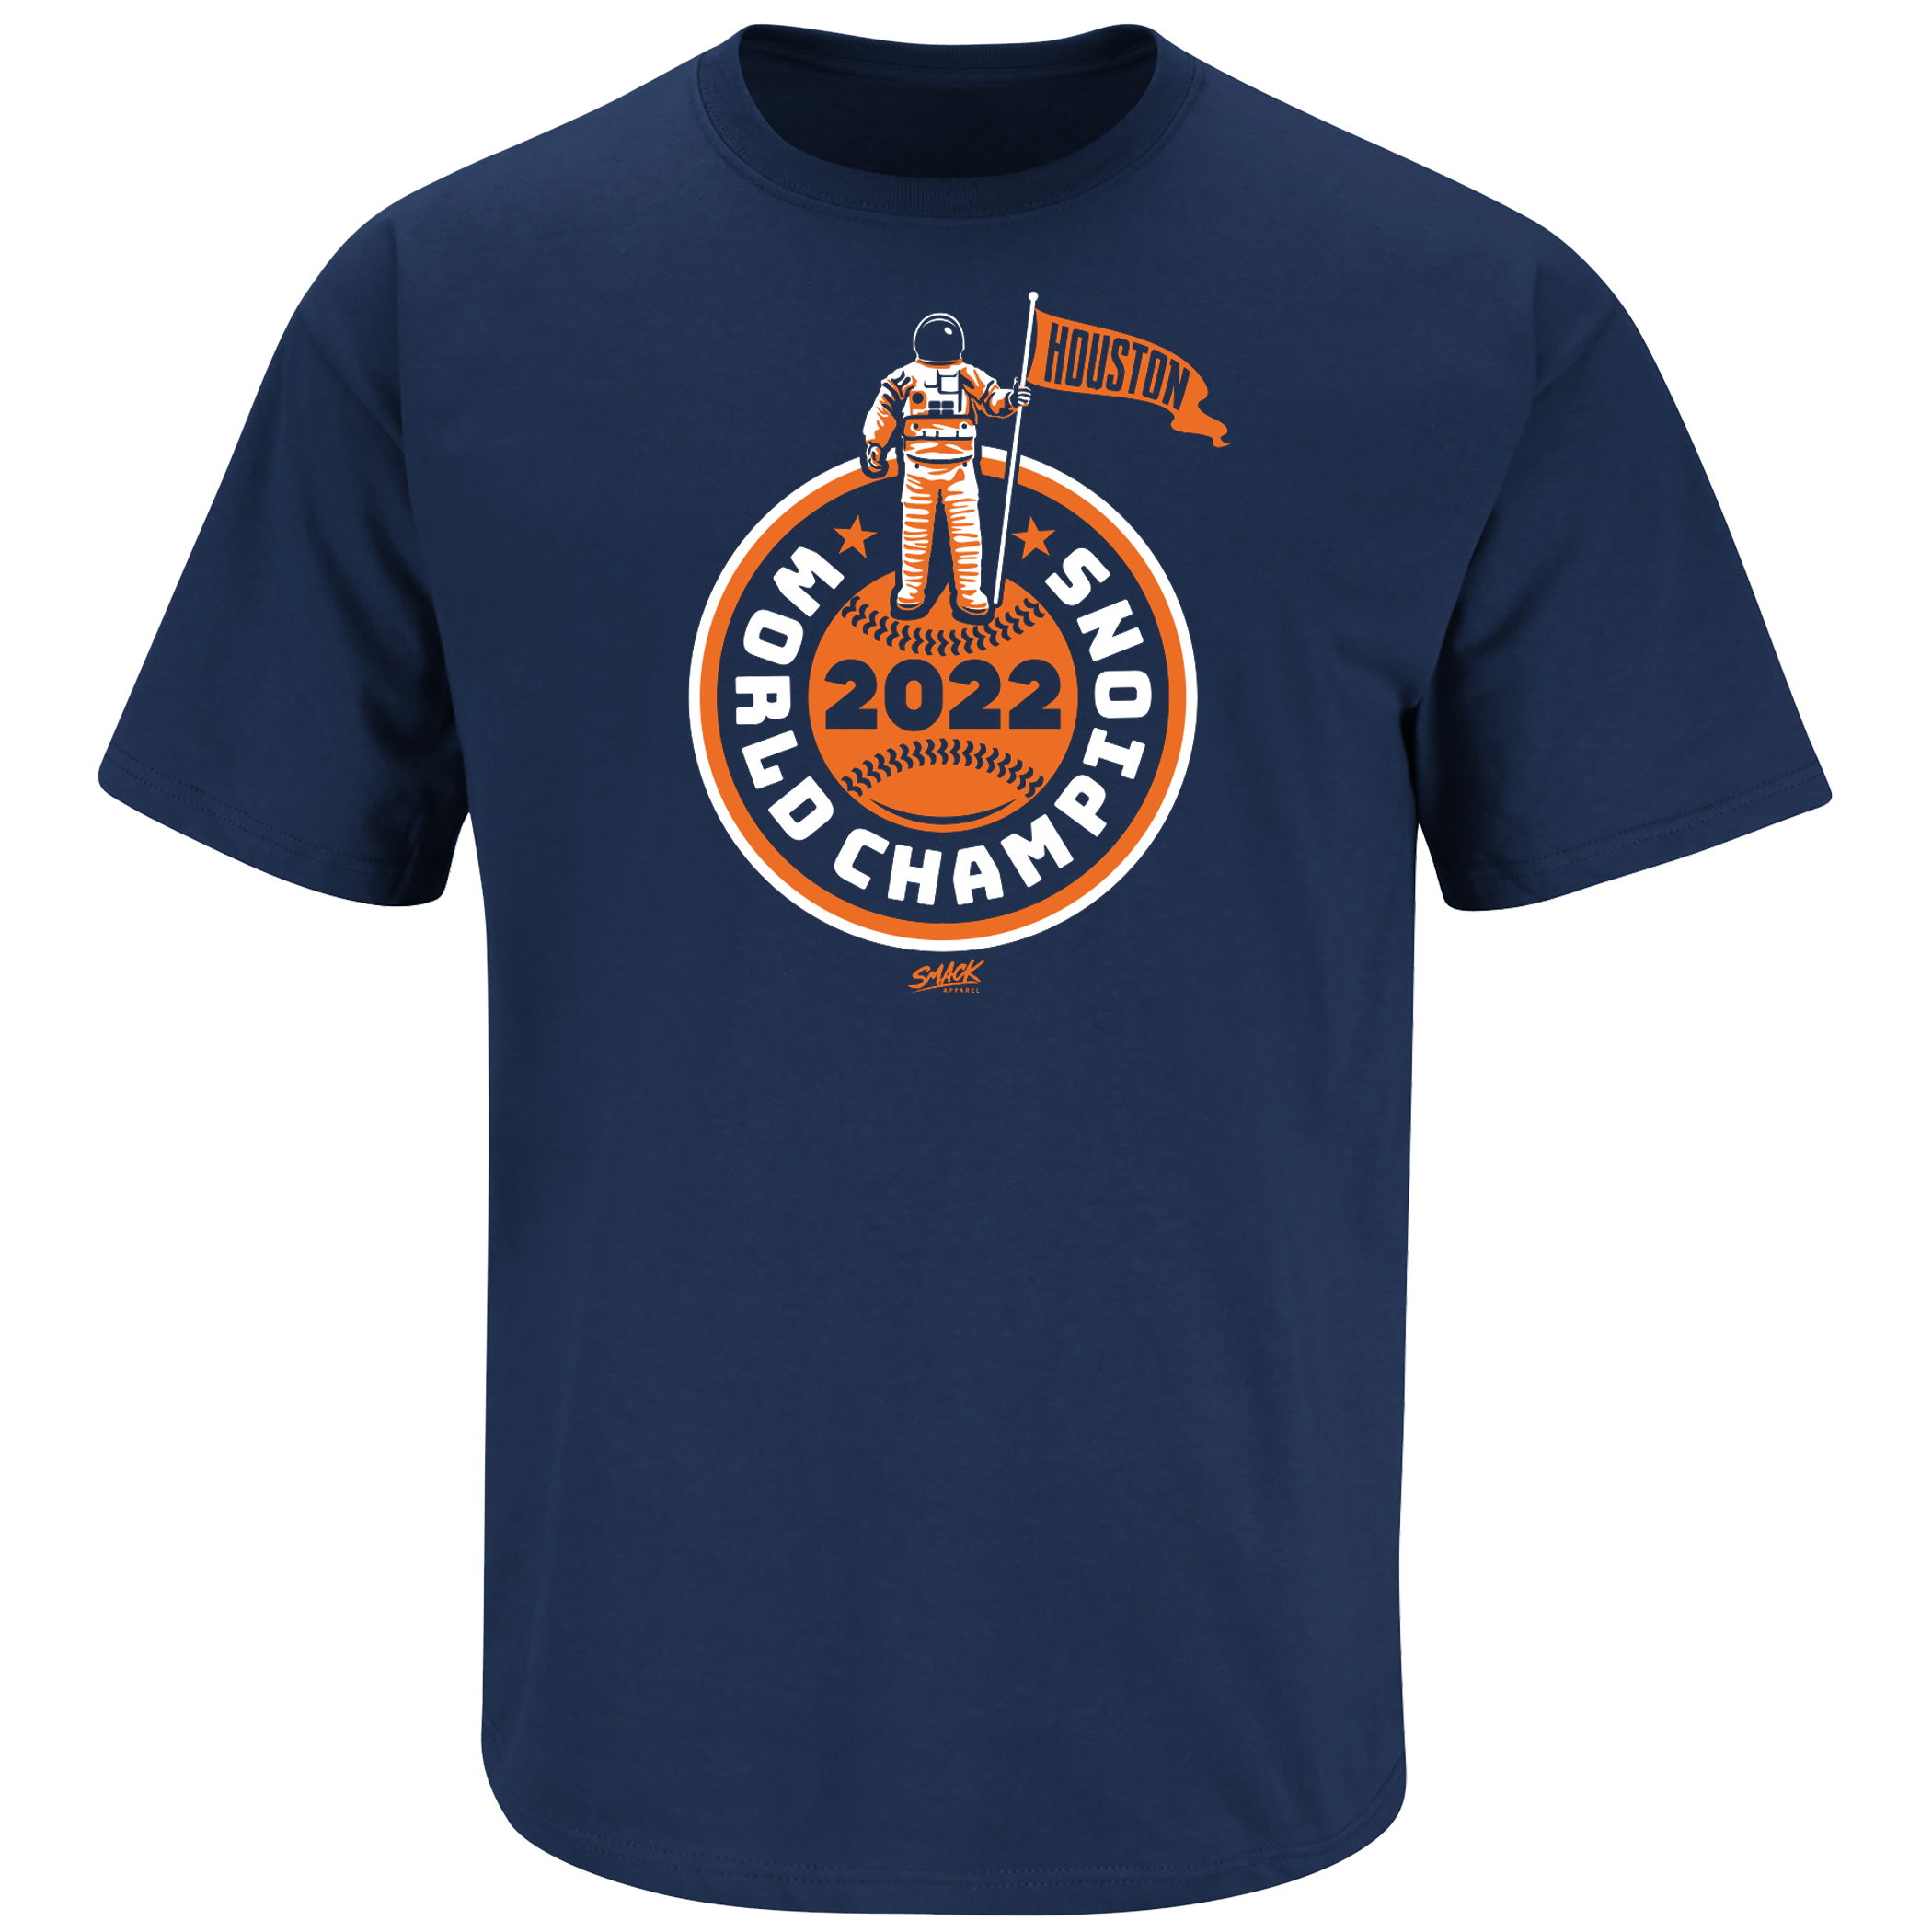  Houston Shirt 2022 World Championship Champs T-Shirt